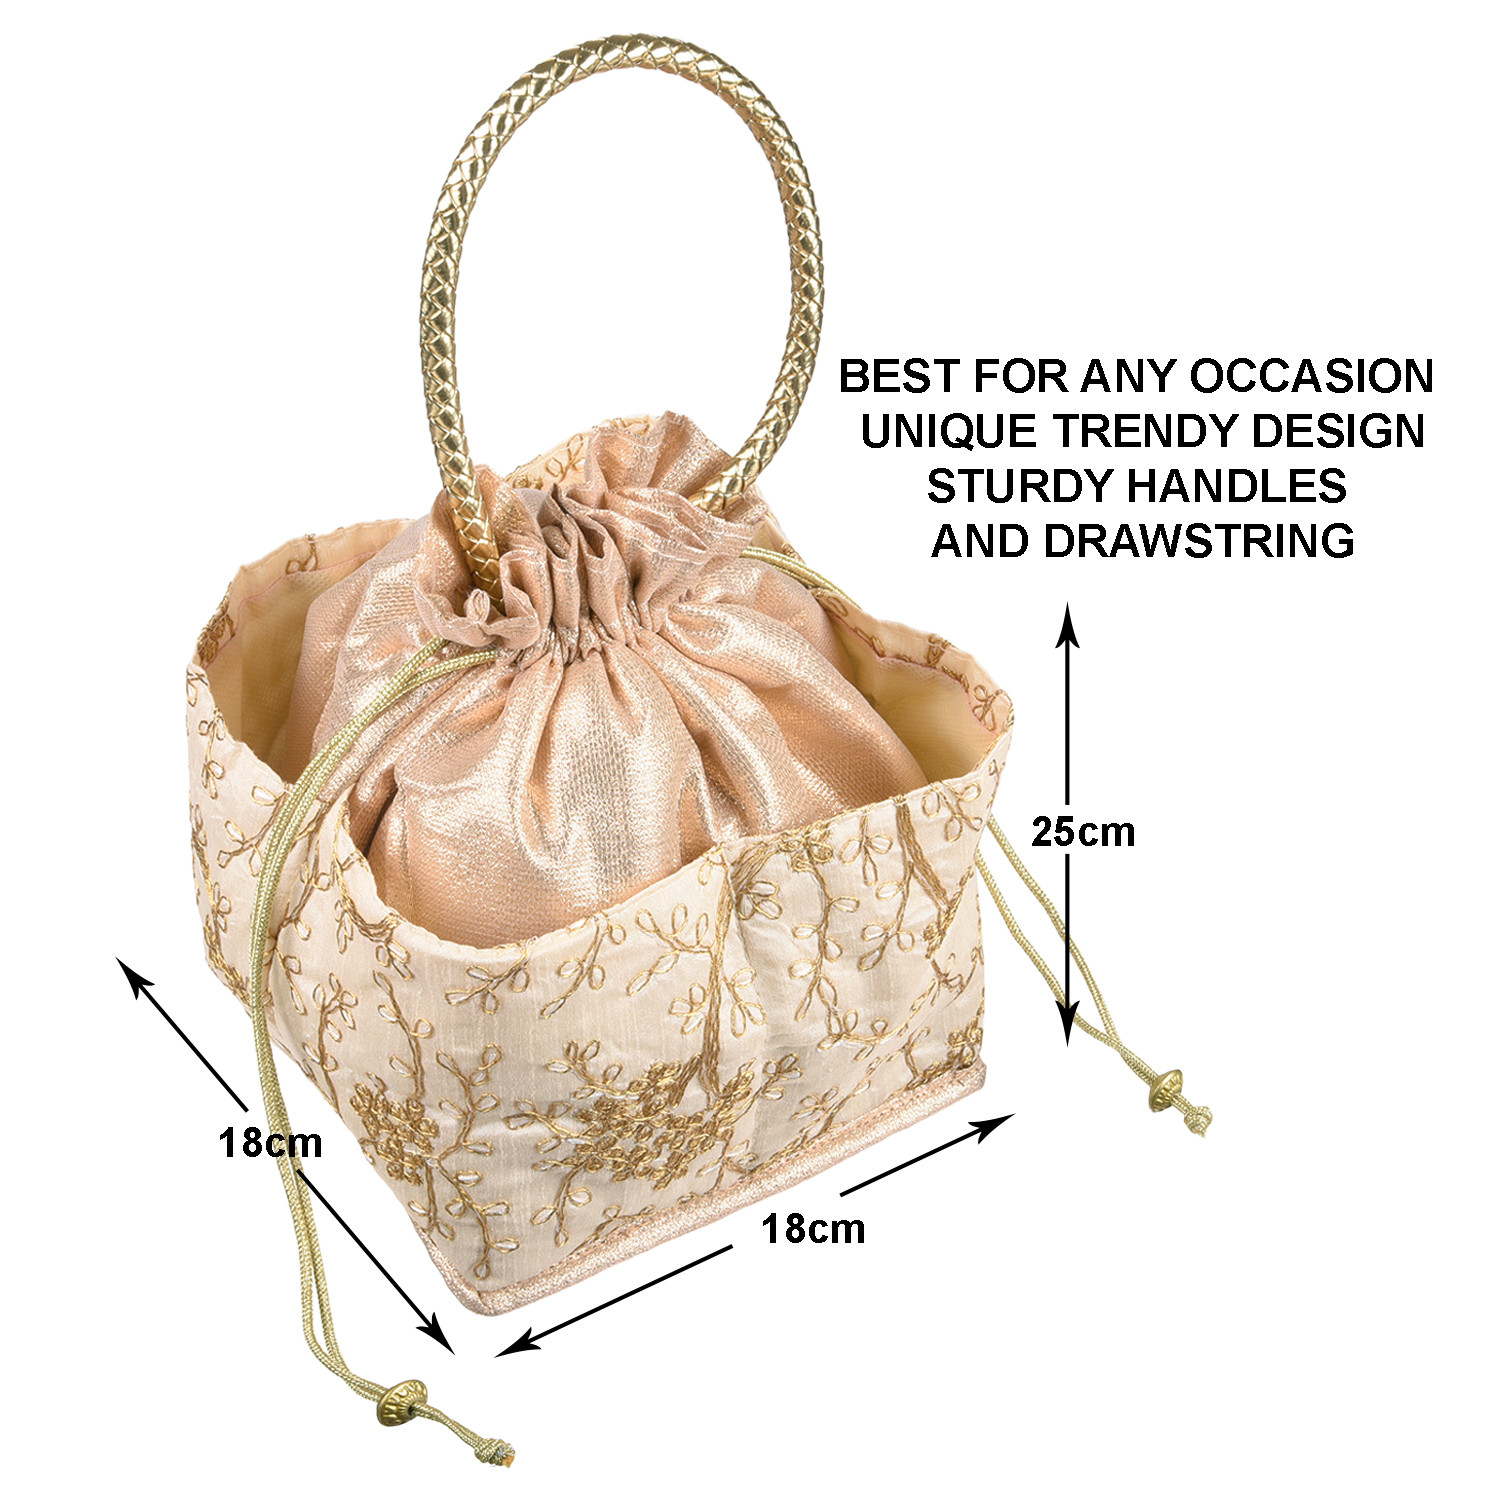 Kuber Industries Hand Bag|Silk Embroidery Drawstring Bag|Traditional Indian Handmade 5 Pocket Potli Bag with Golden Handle (Cream)